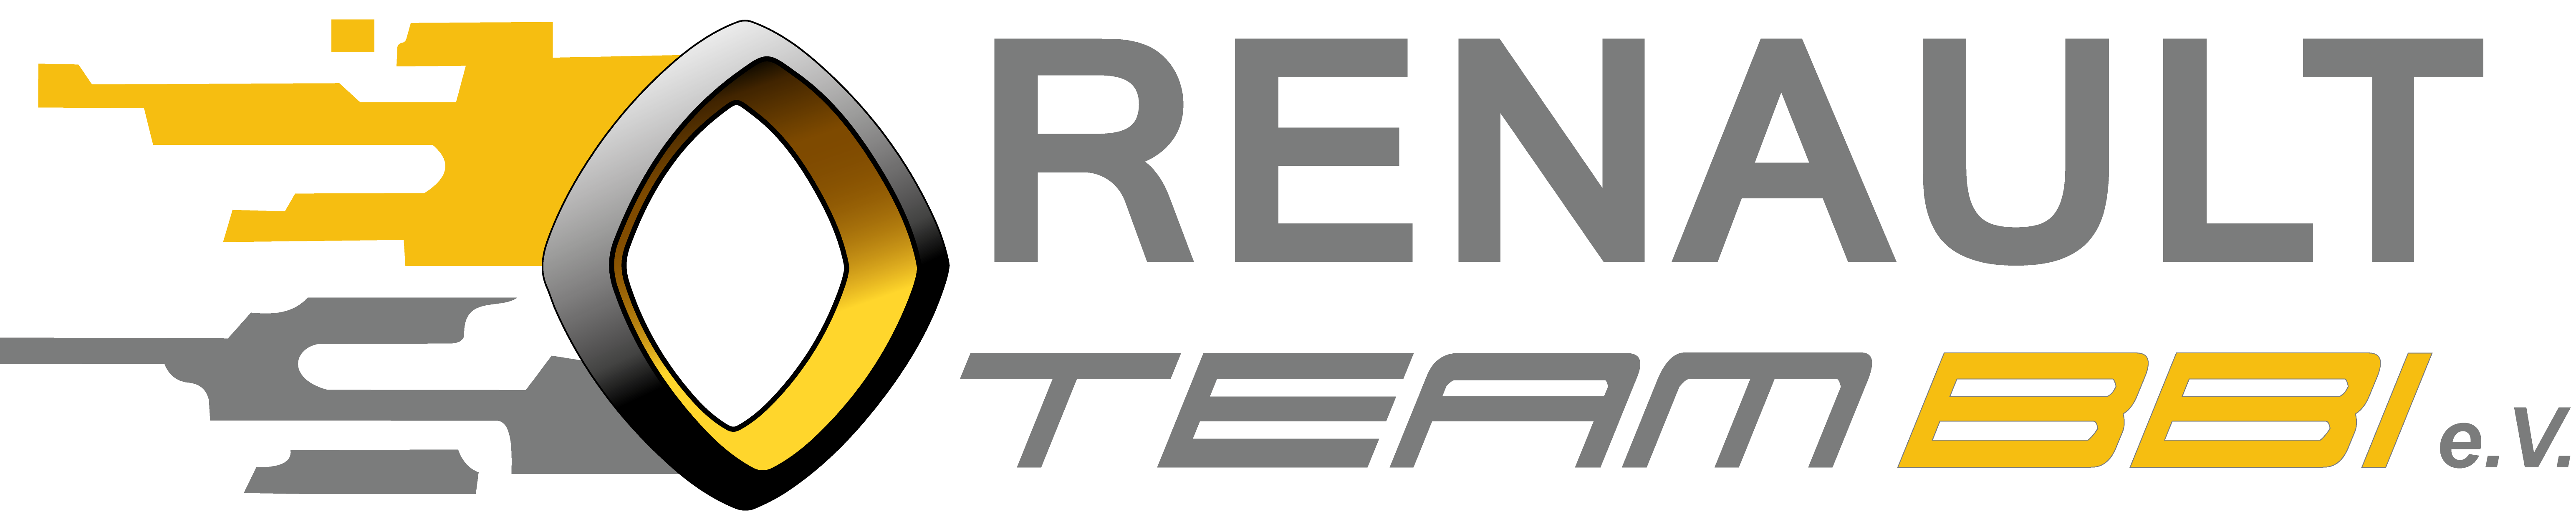 Renault Team BBI 2017